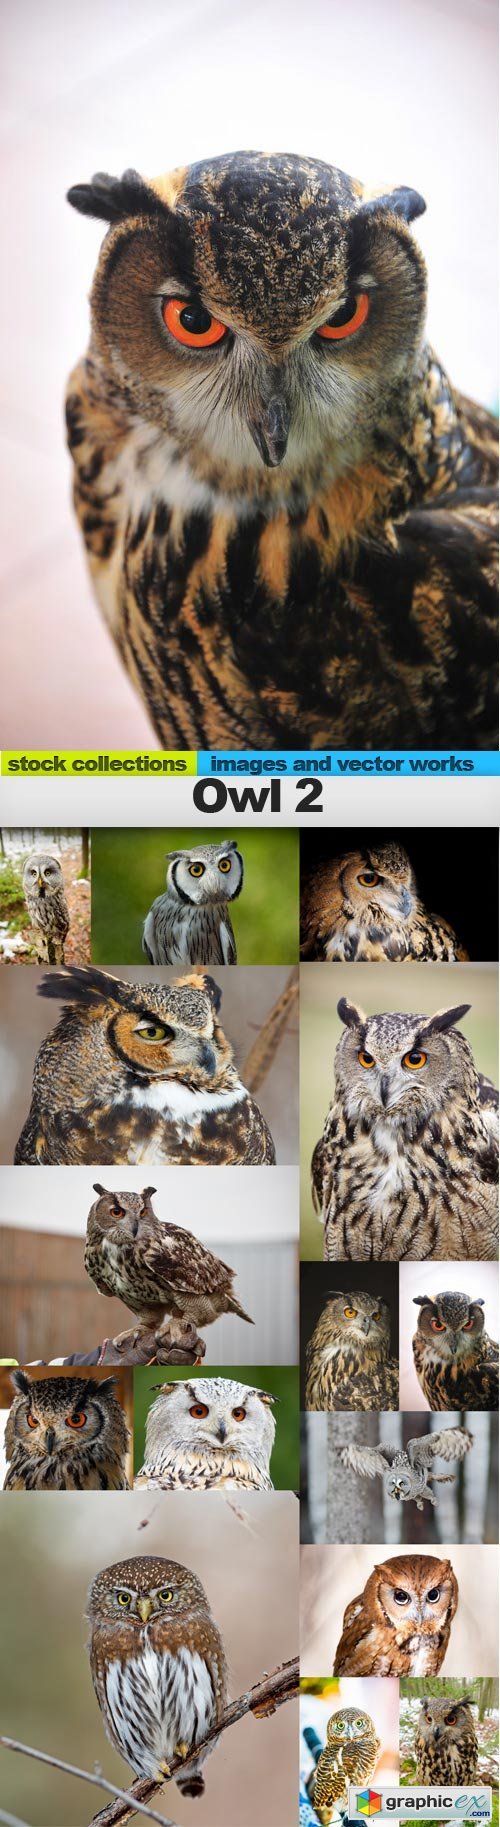 Owl 2, 15 x UHQ JPEG